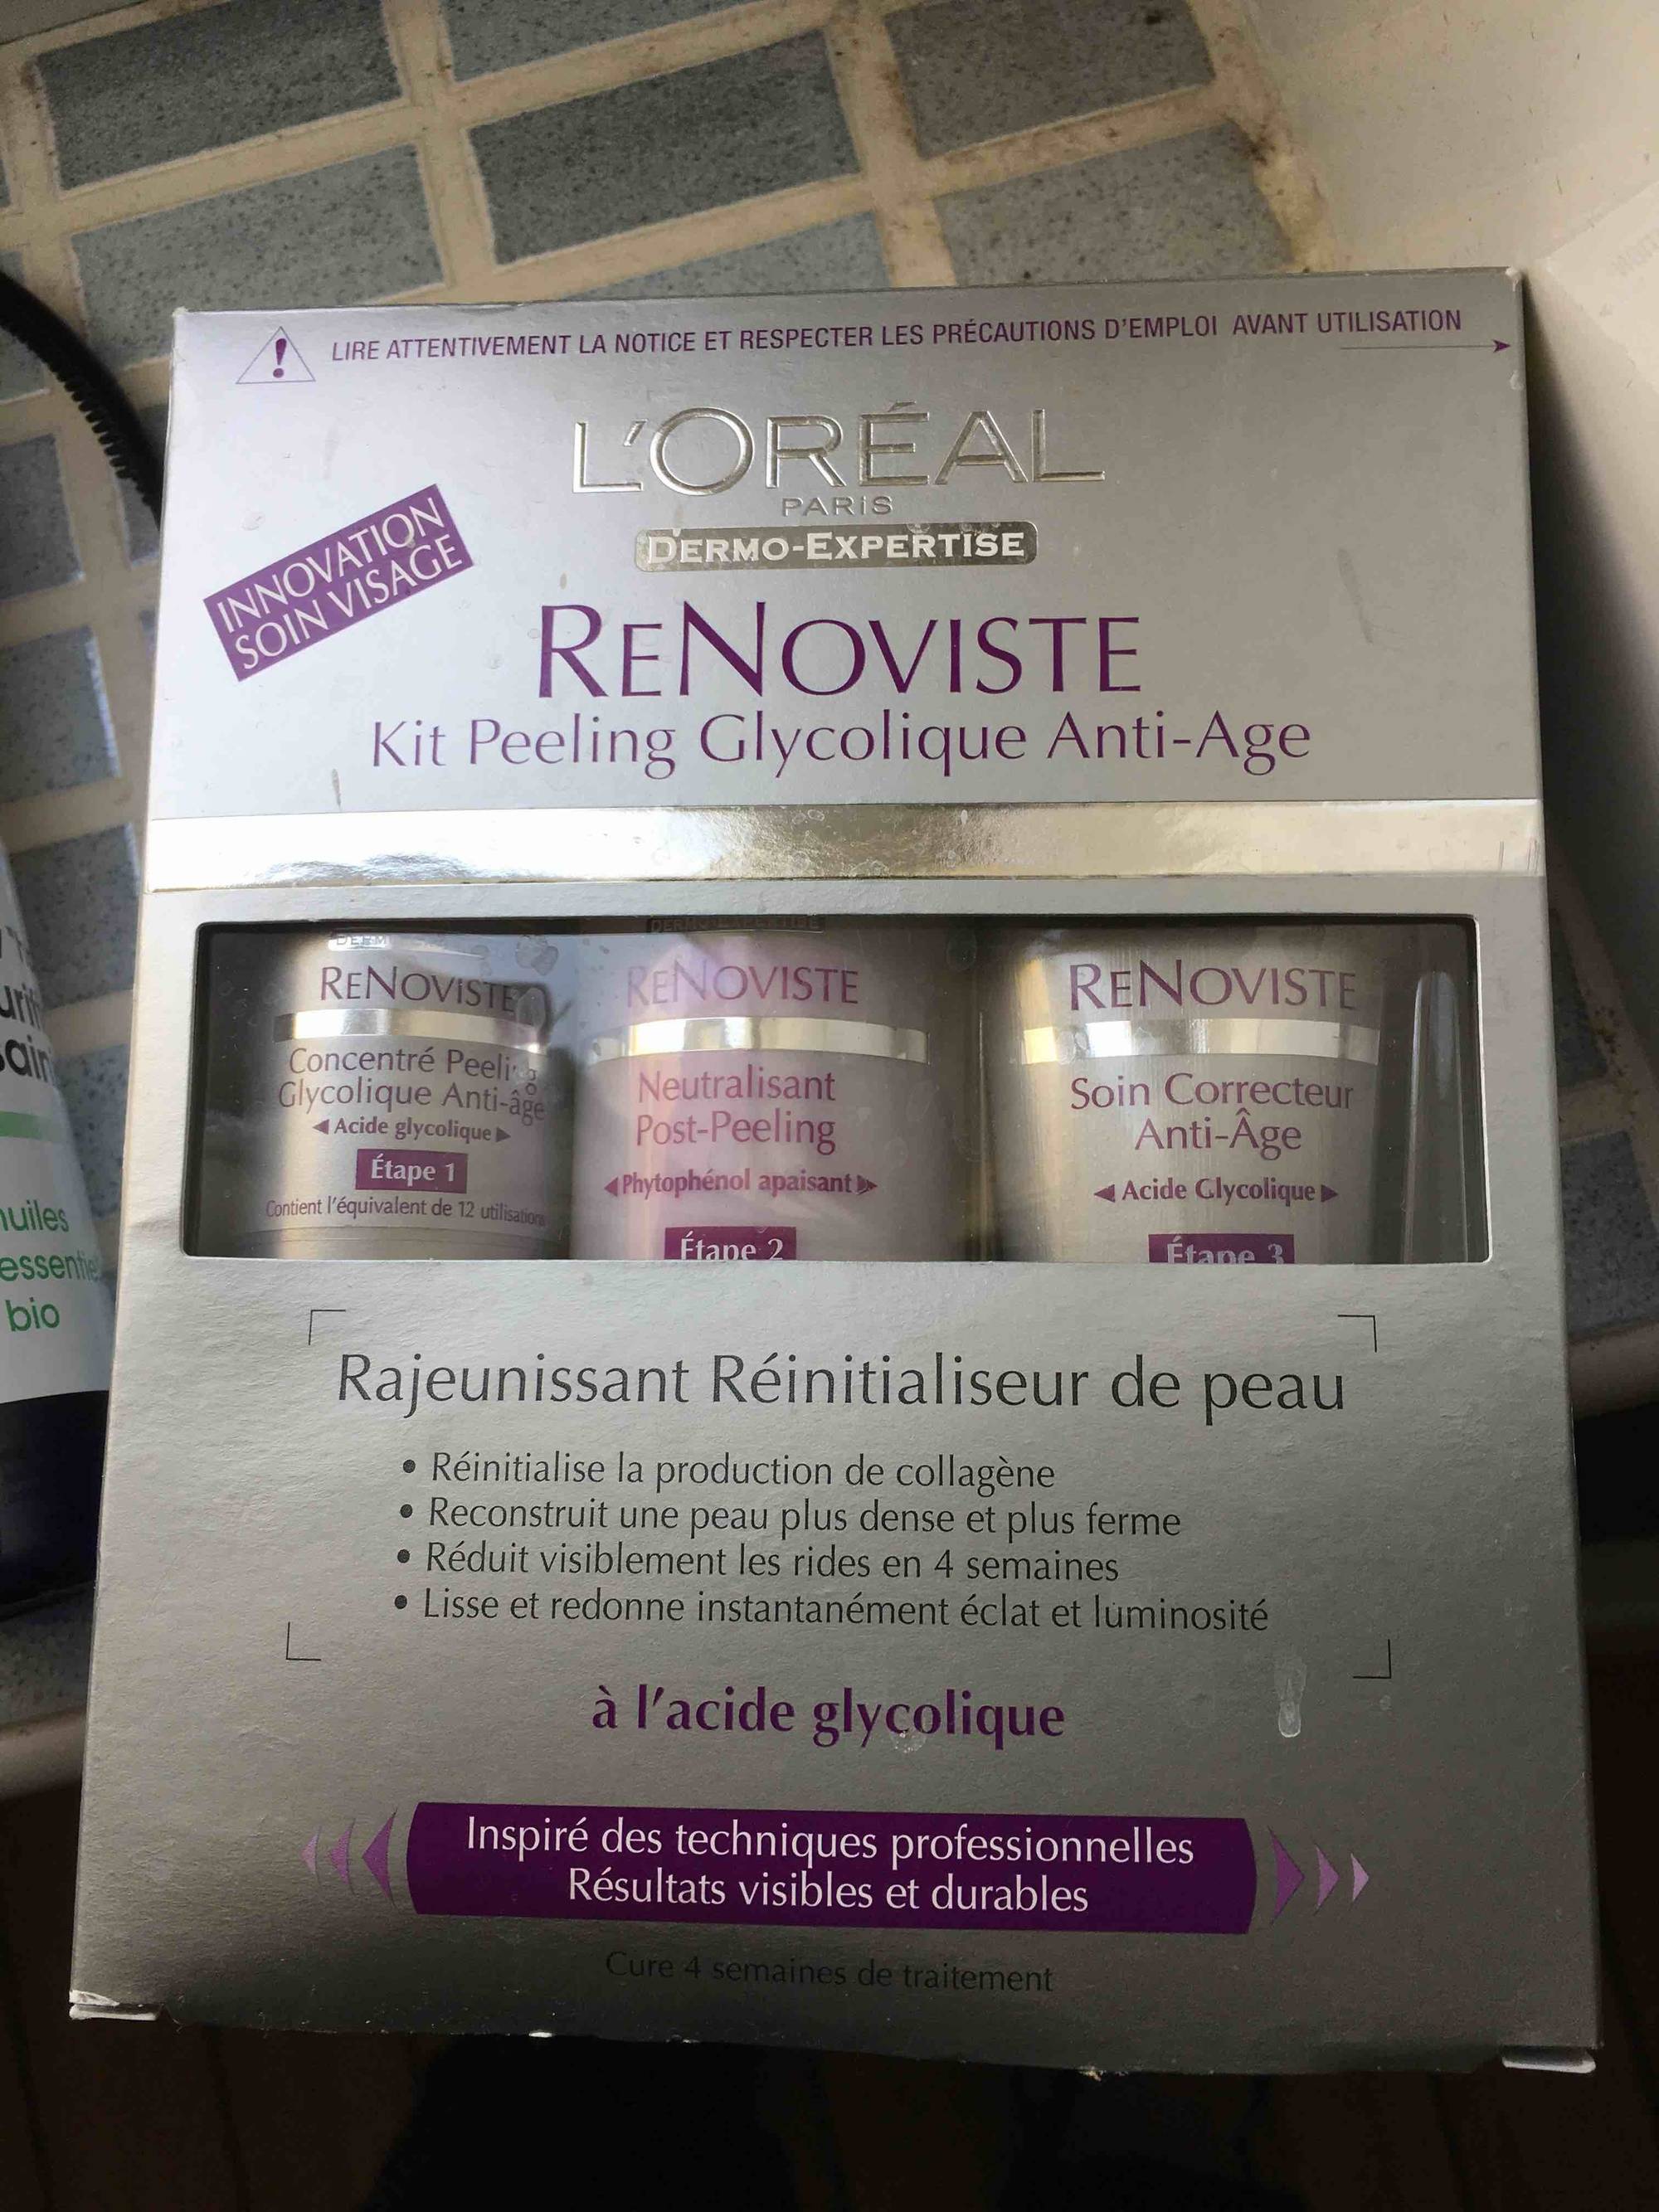 L'ORÉAL - Dermo-expertise - Renoviste - Kit peeling glycolique anti-age